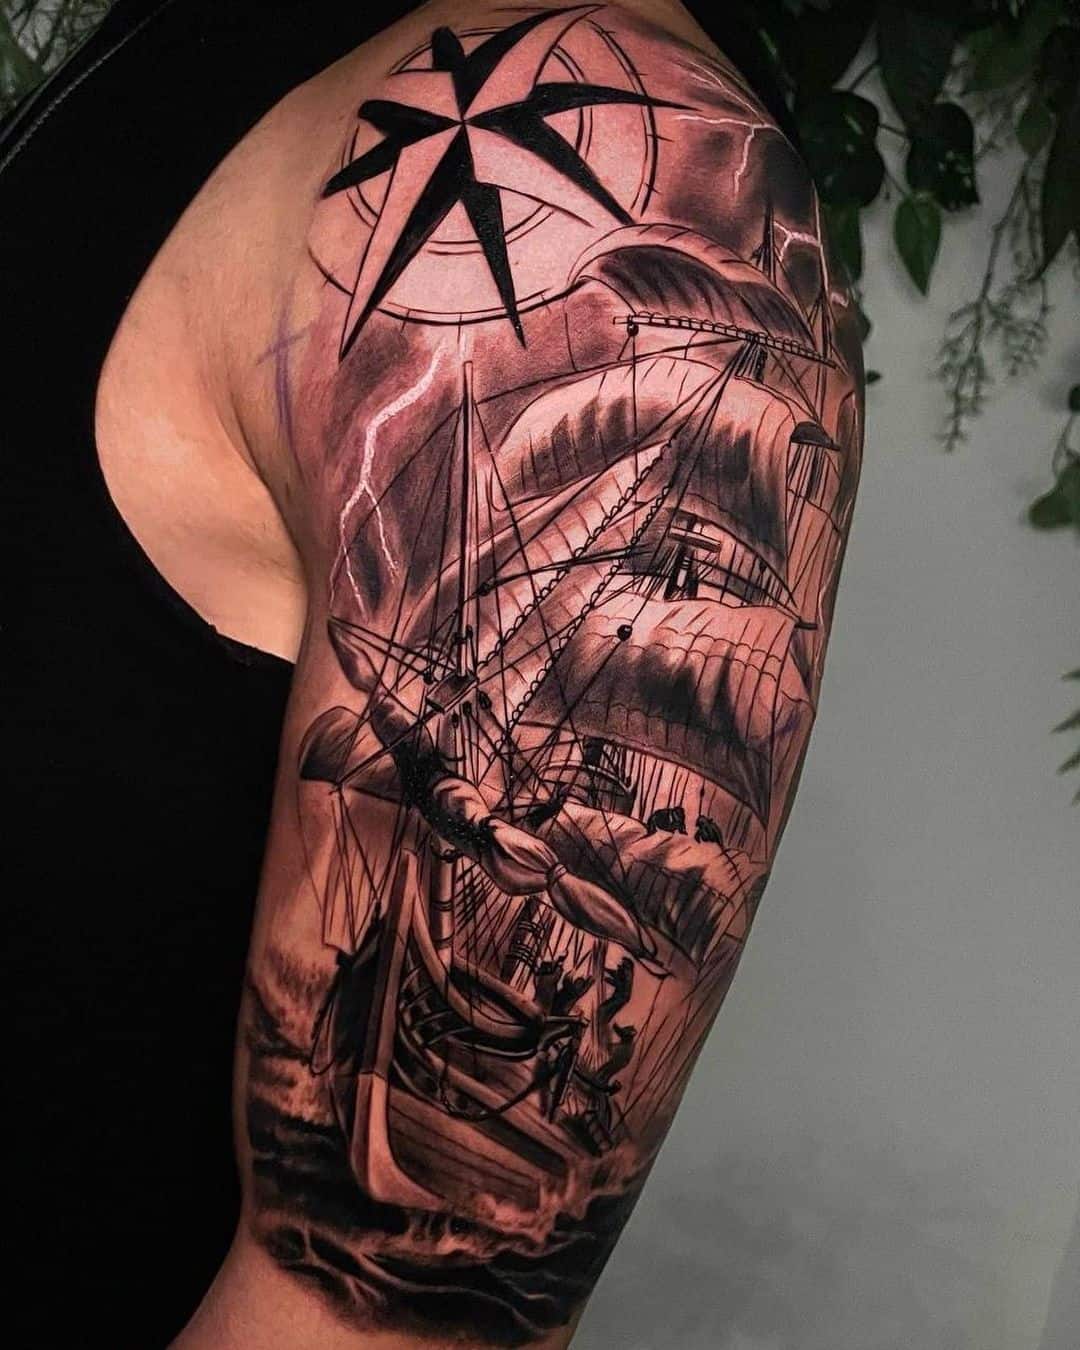 viking ship tattoo